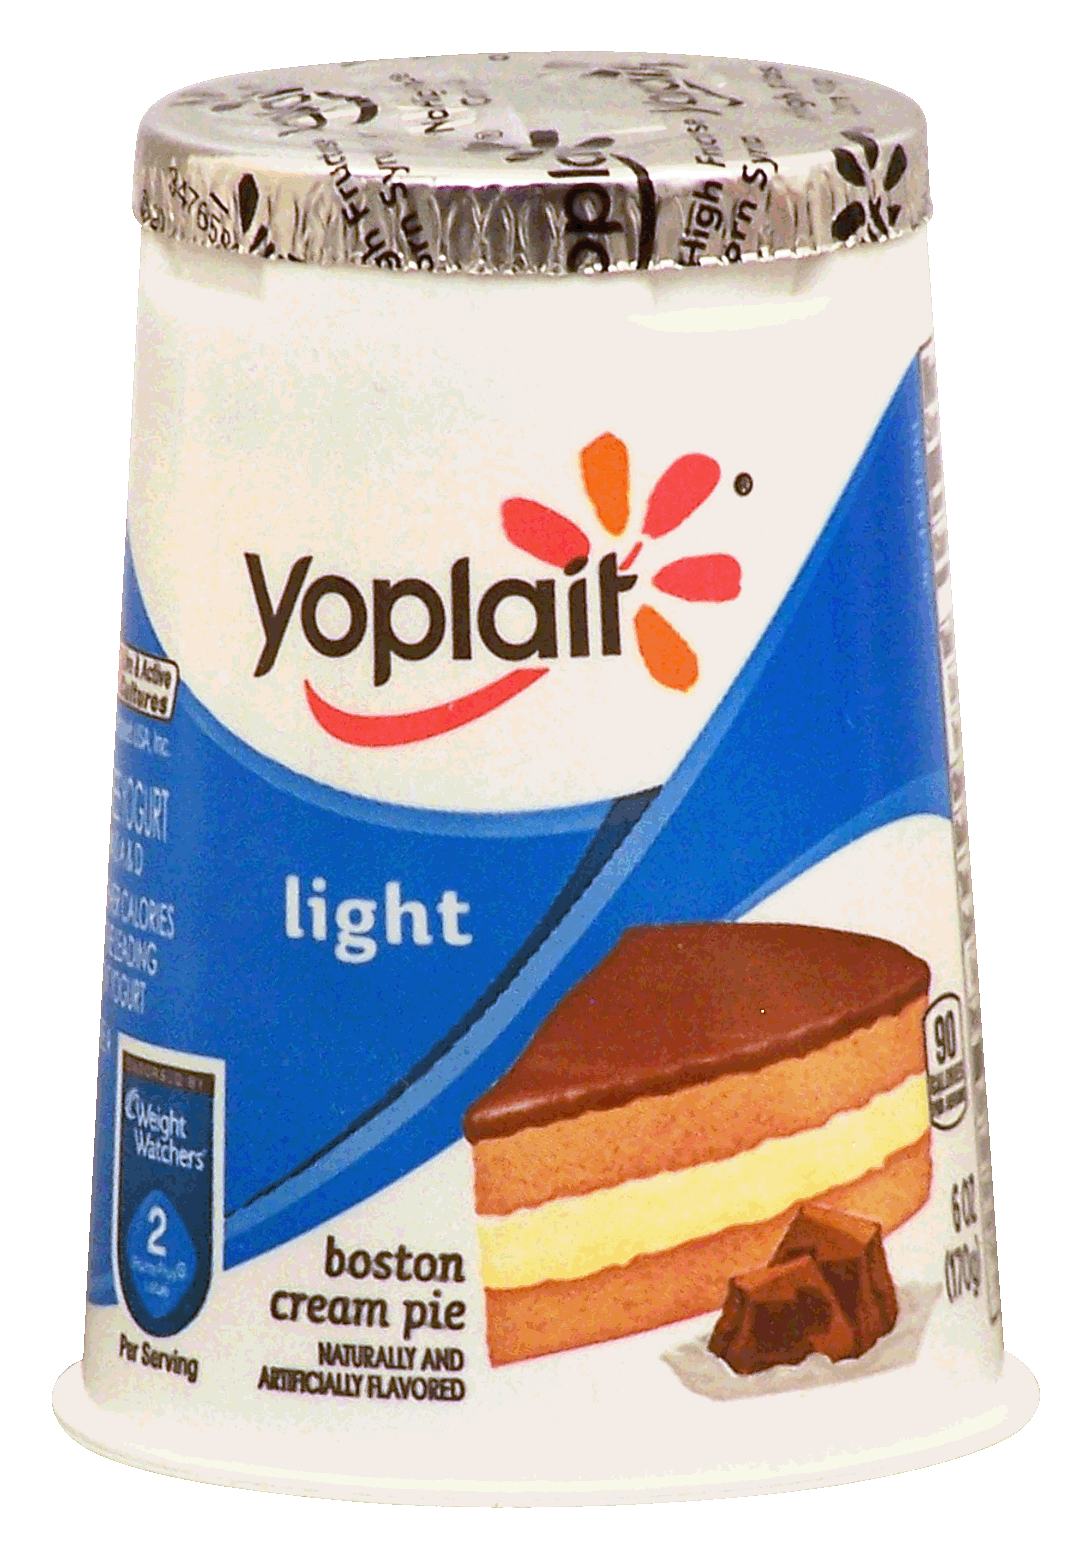 Yoplait Light boston cream pie fat free yogurt Full-Size Picture